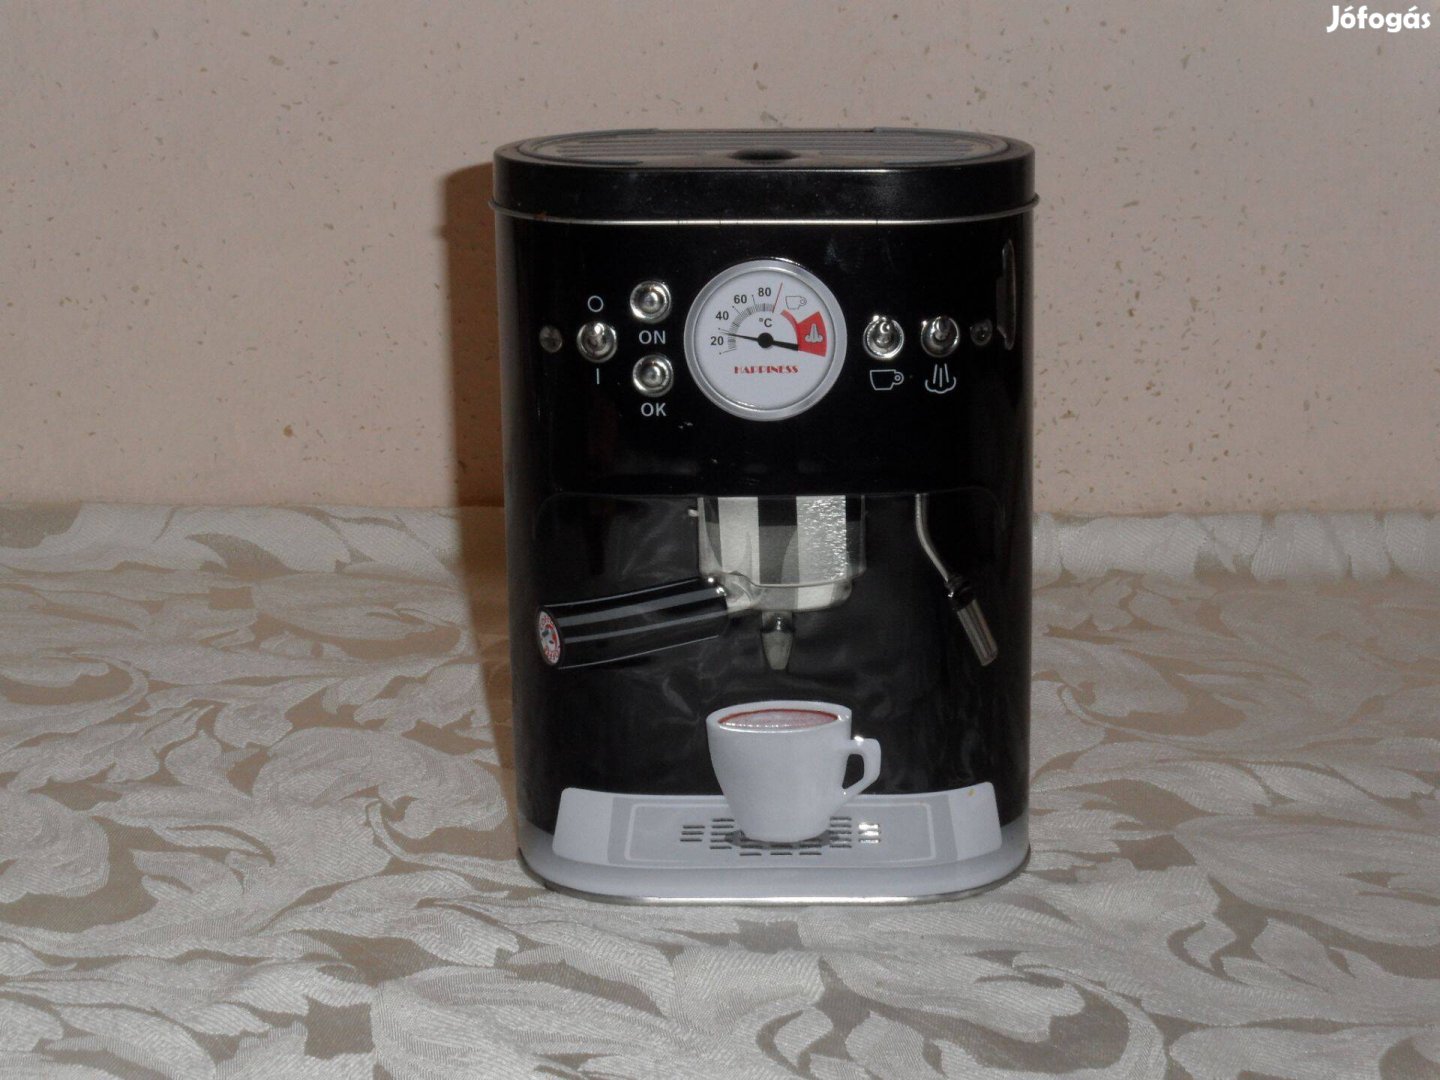 Kávéfőző alakú fém kávés doboz